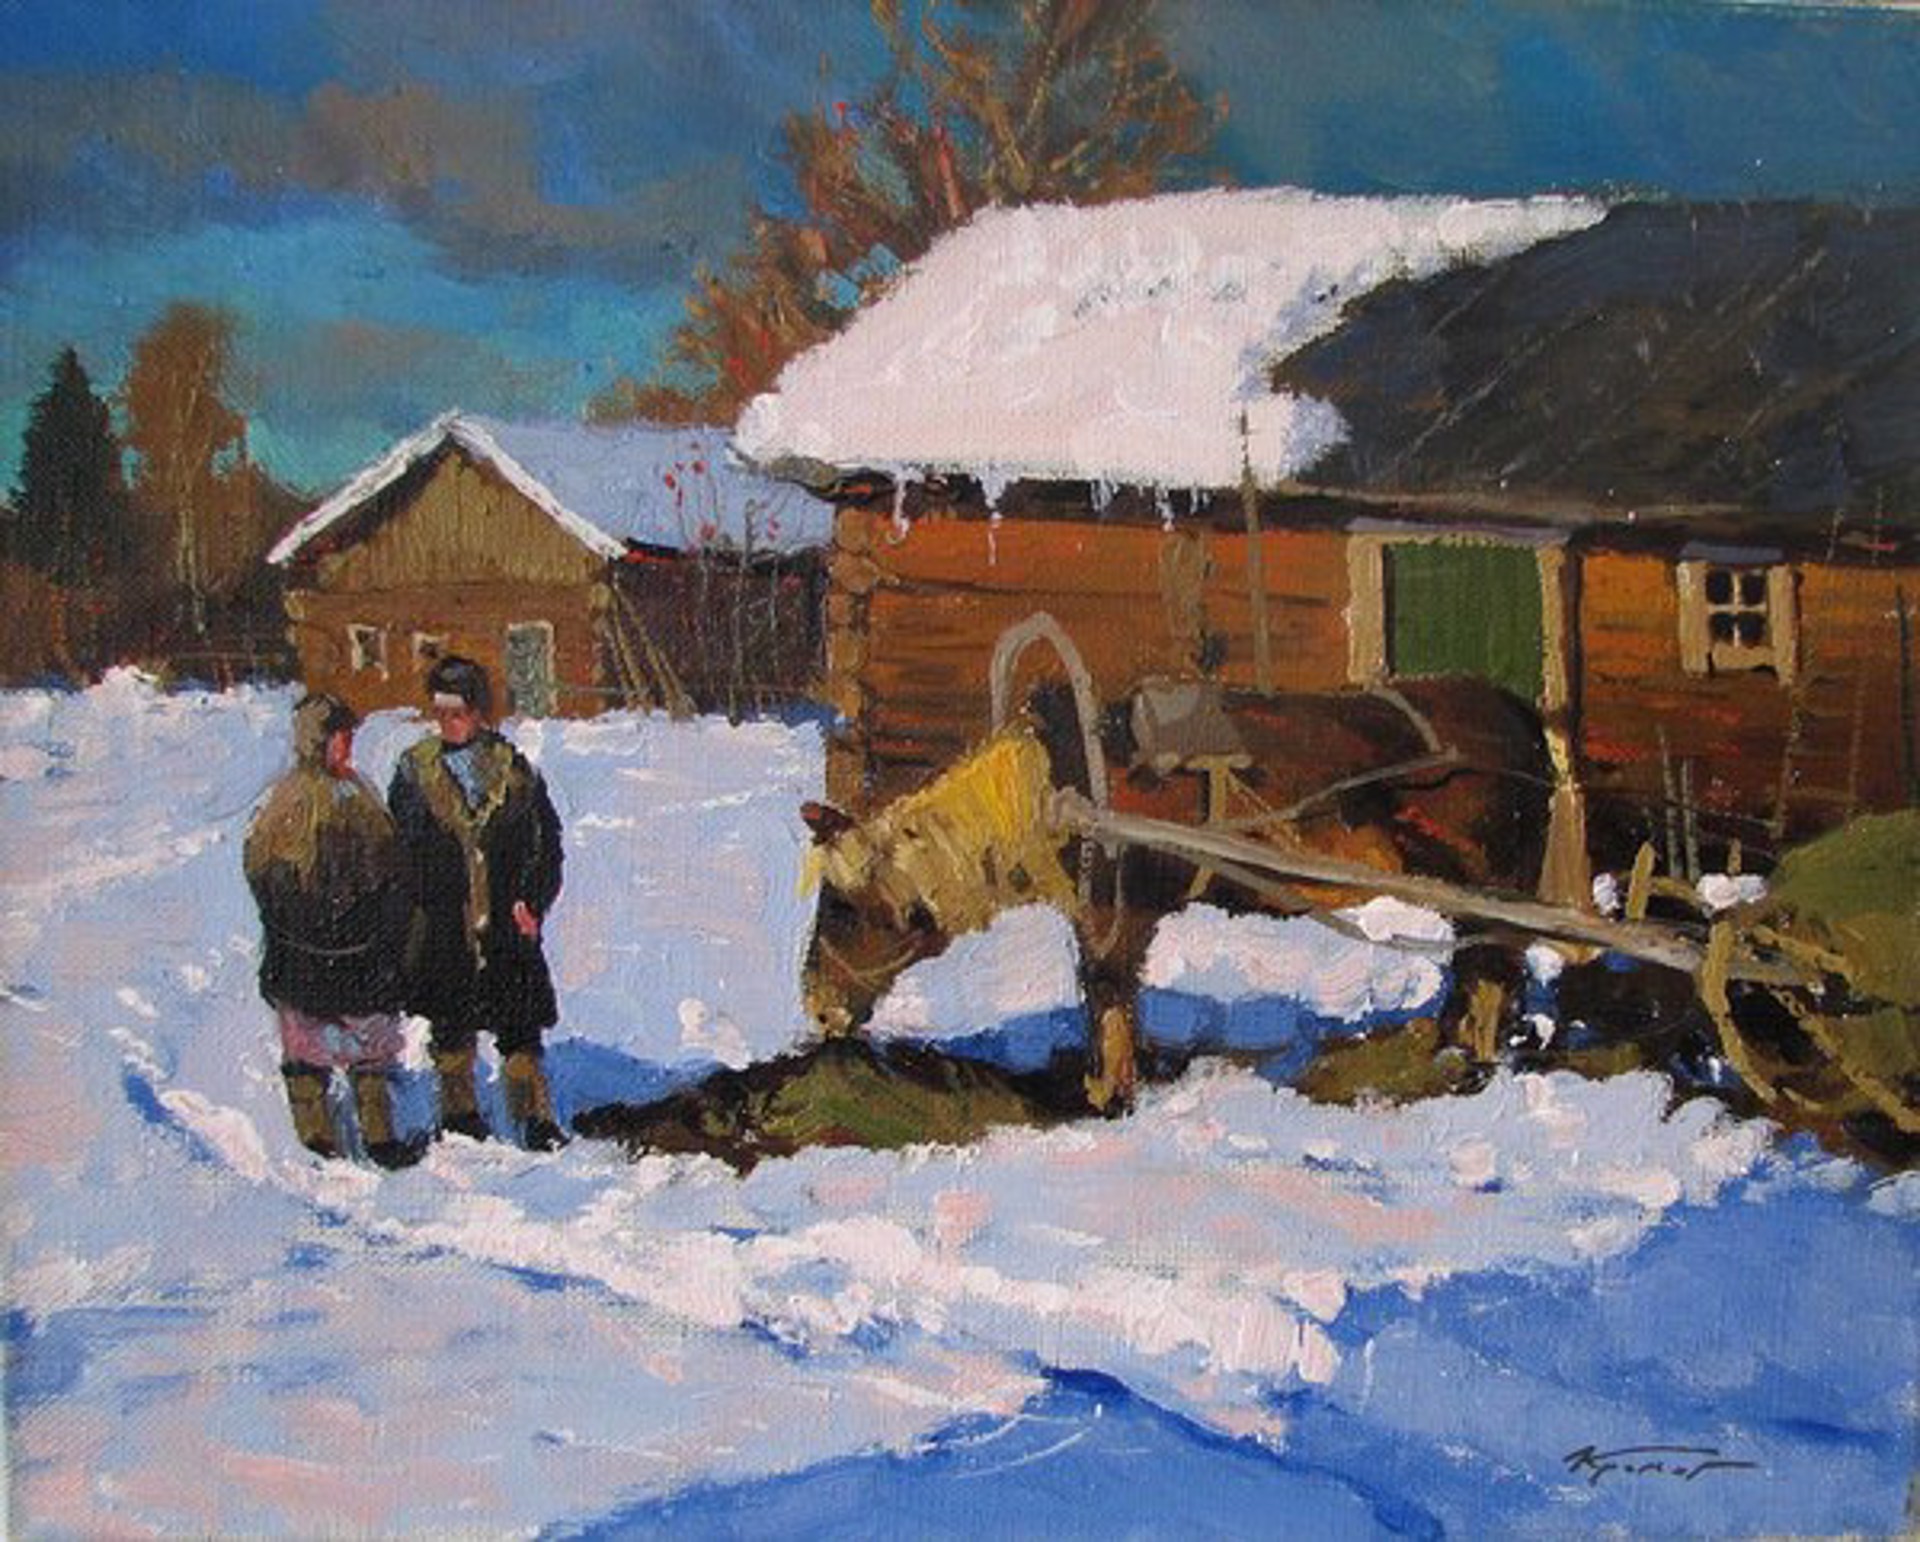 At The Barn by Alexander Kremer